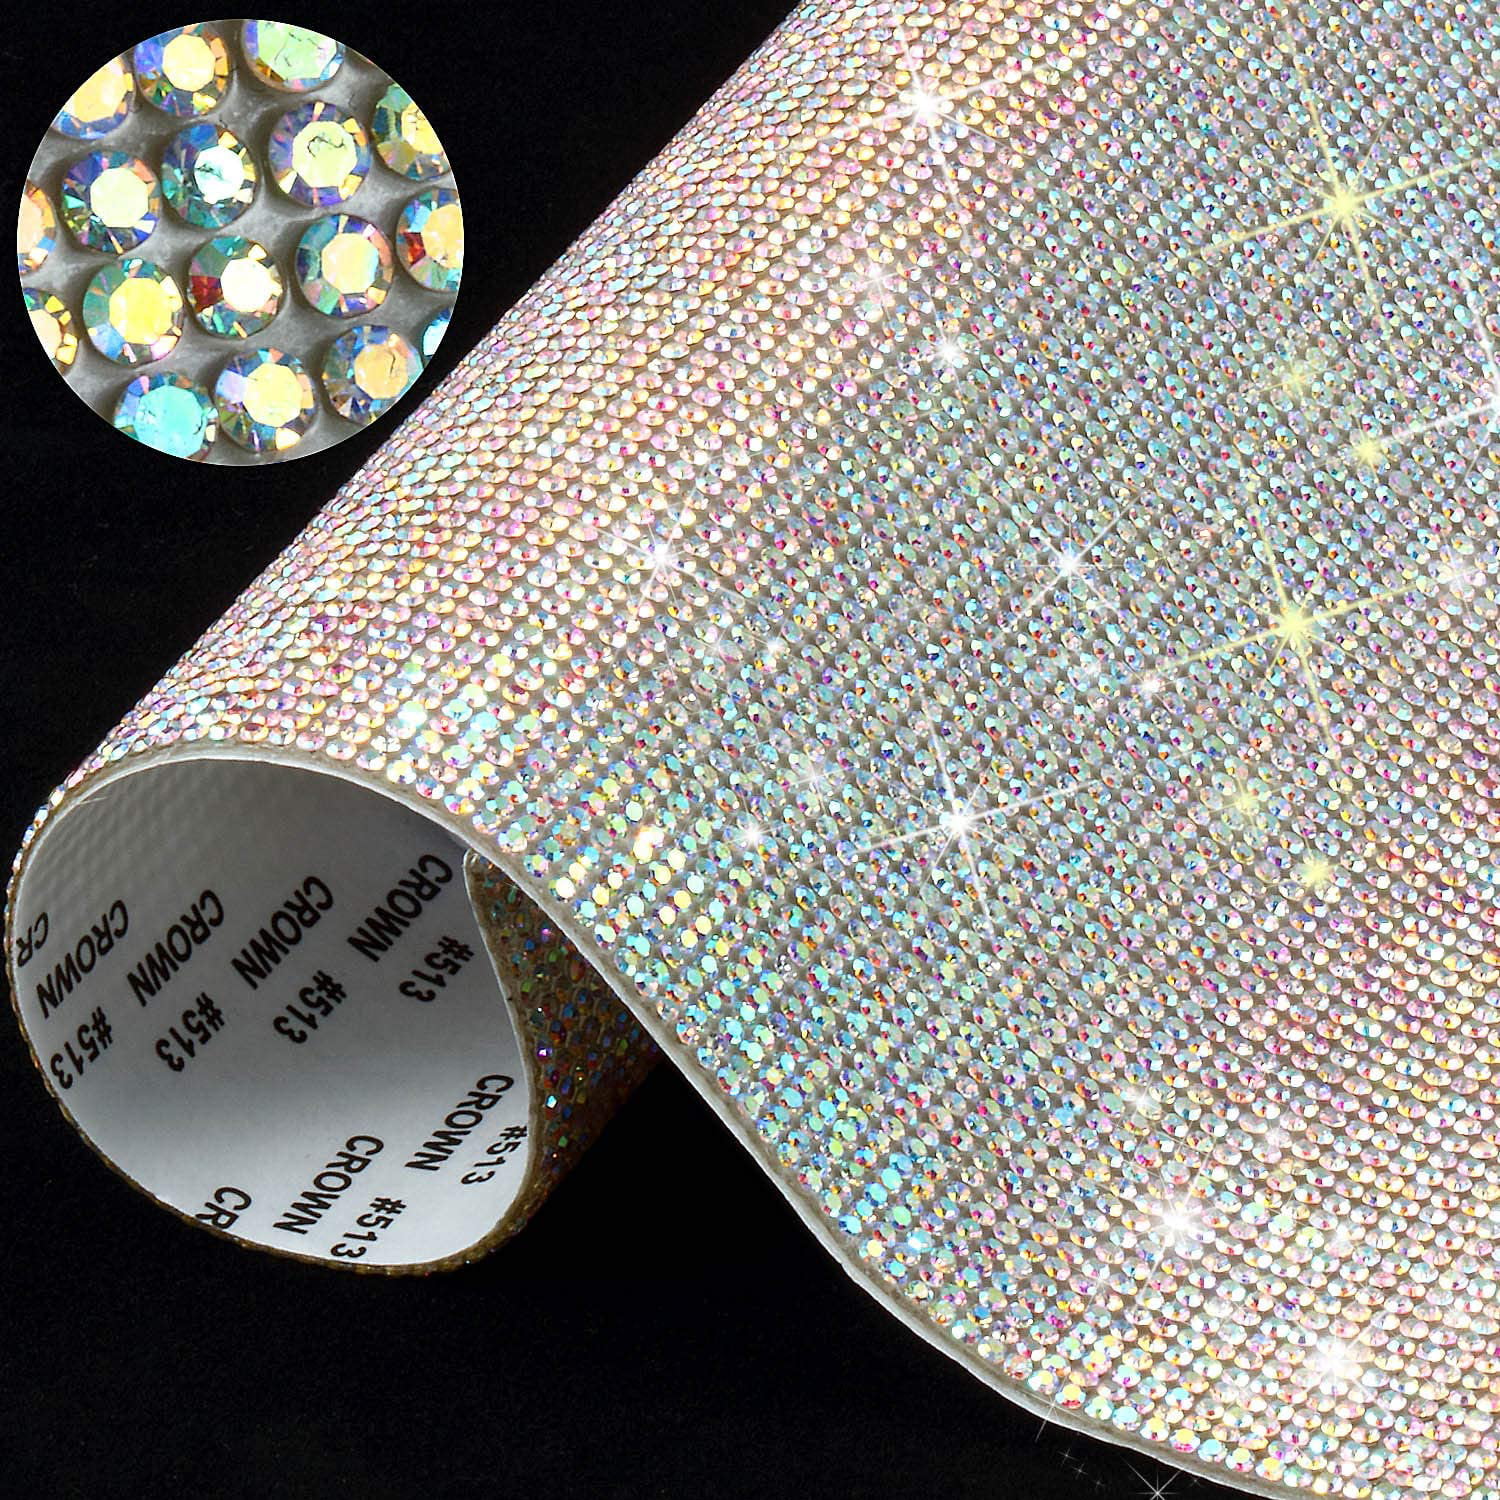 Self-Adhesive Gems Bling Crystal Adhesive Rhinestone Sheets Car Sticker 24X40Cm 